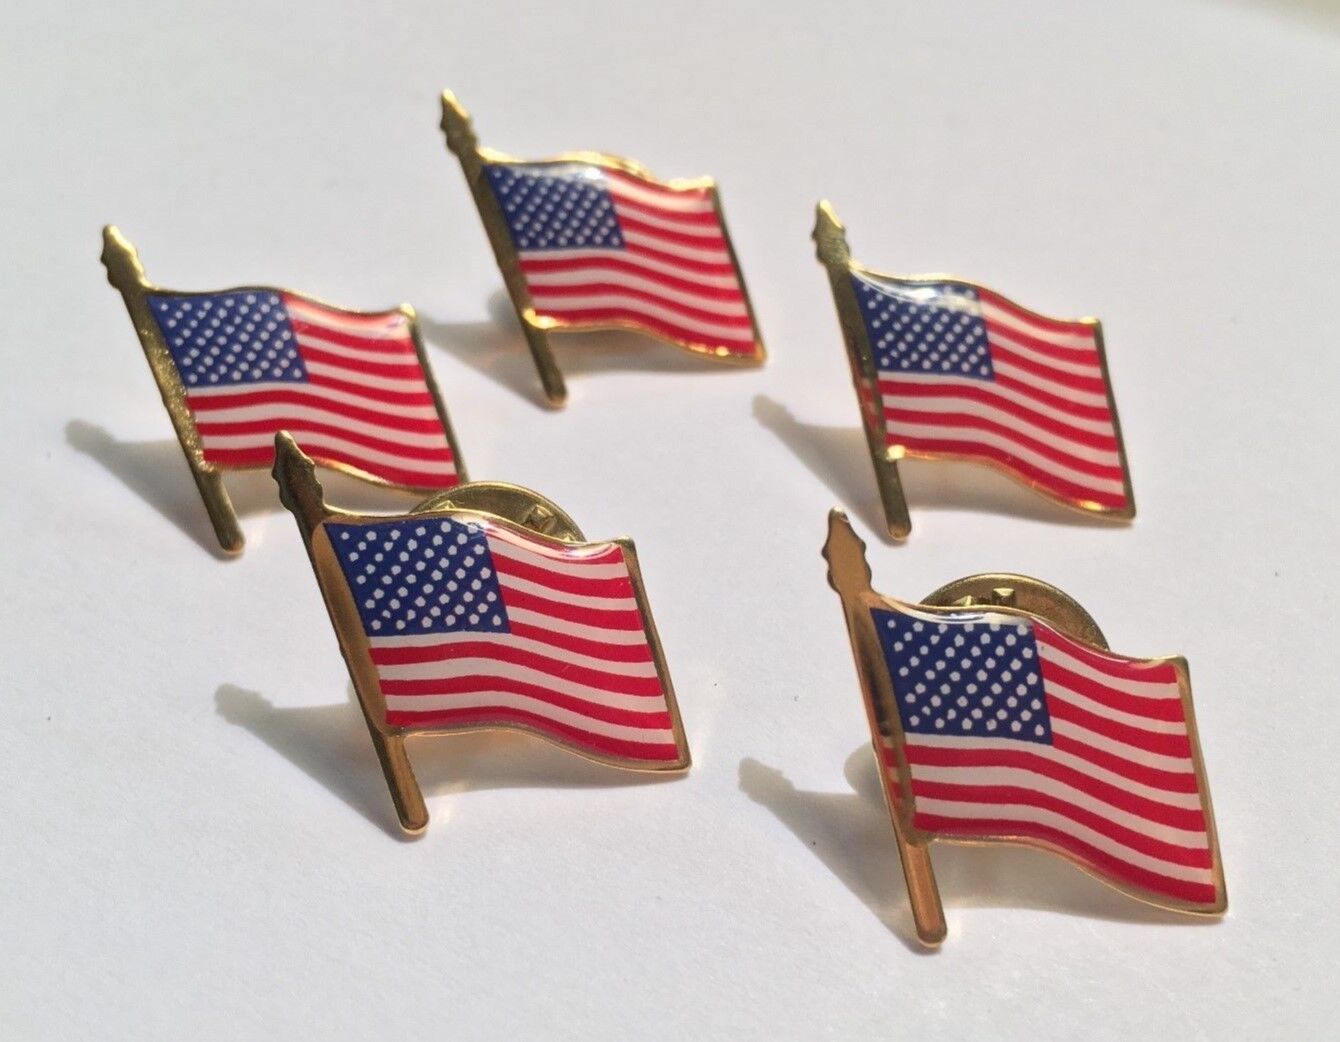 LOT OF 25 American flag lapel pin MADE IN USA Patriotic Memorial Day